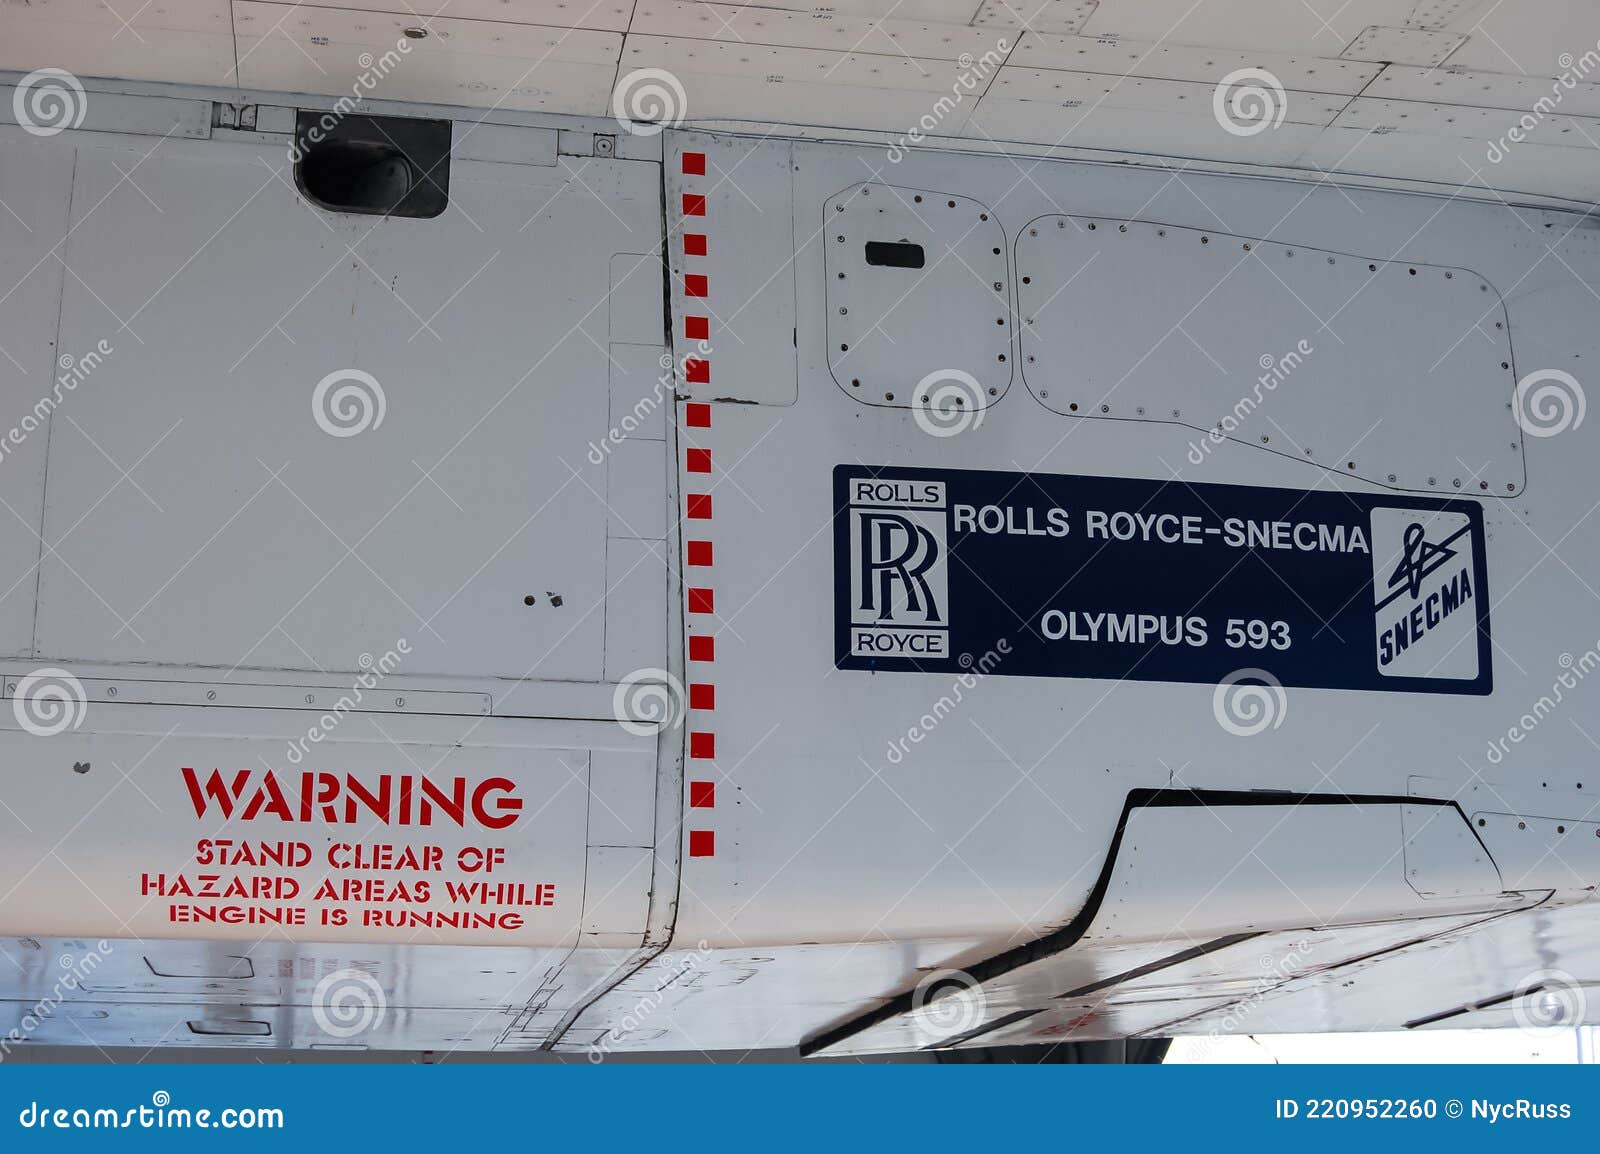 British Airways Concorde Rolls-Royce/Snecma Olympus 593 engines on display at the Intrepid Sea, Air and Space museum